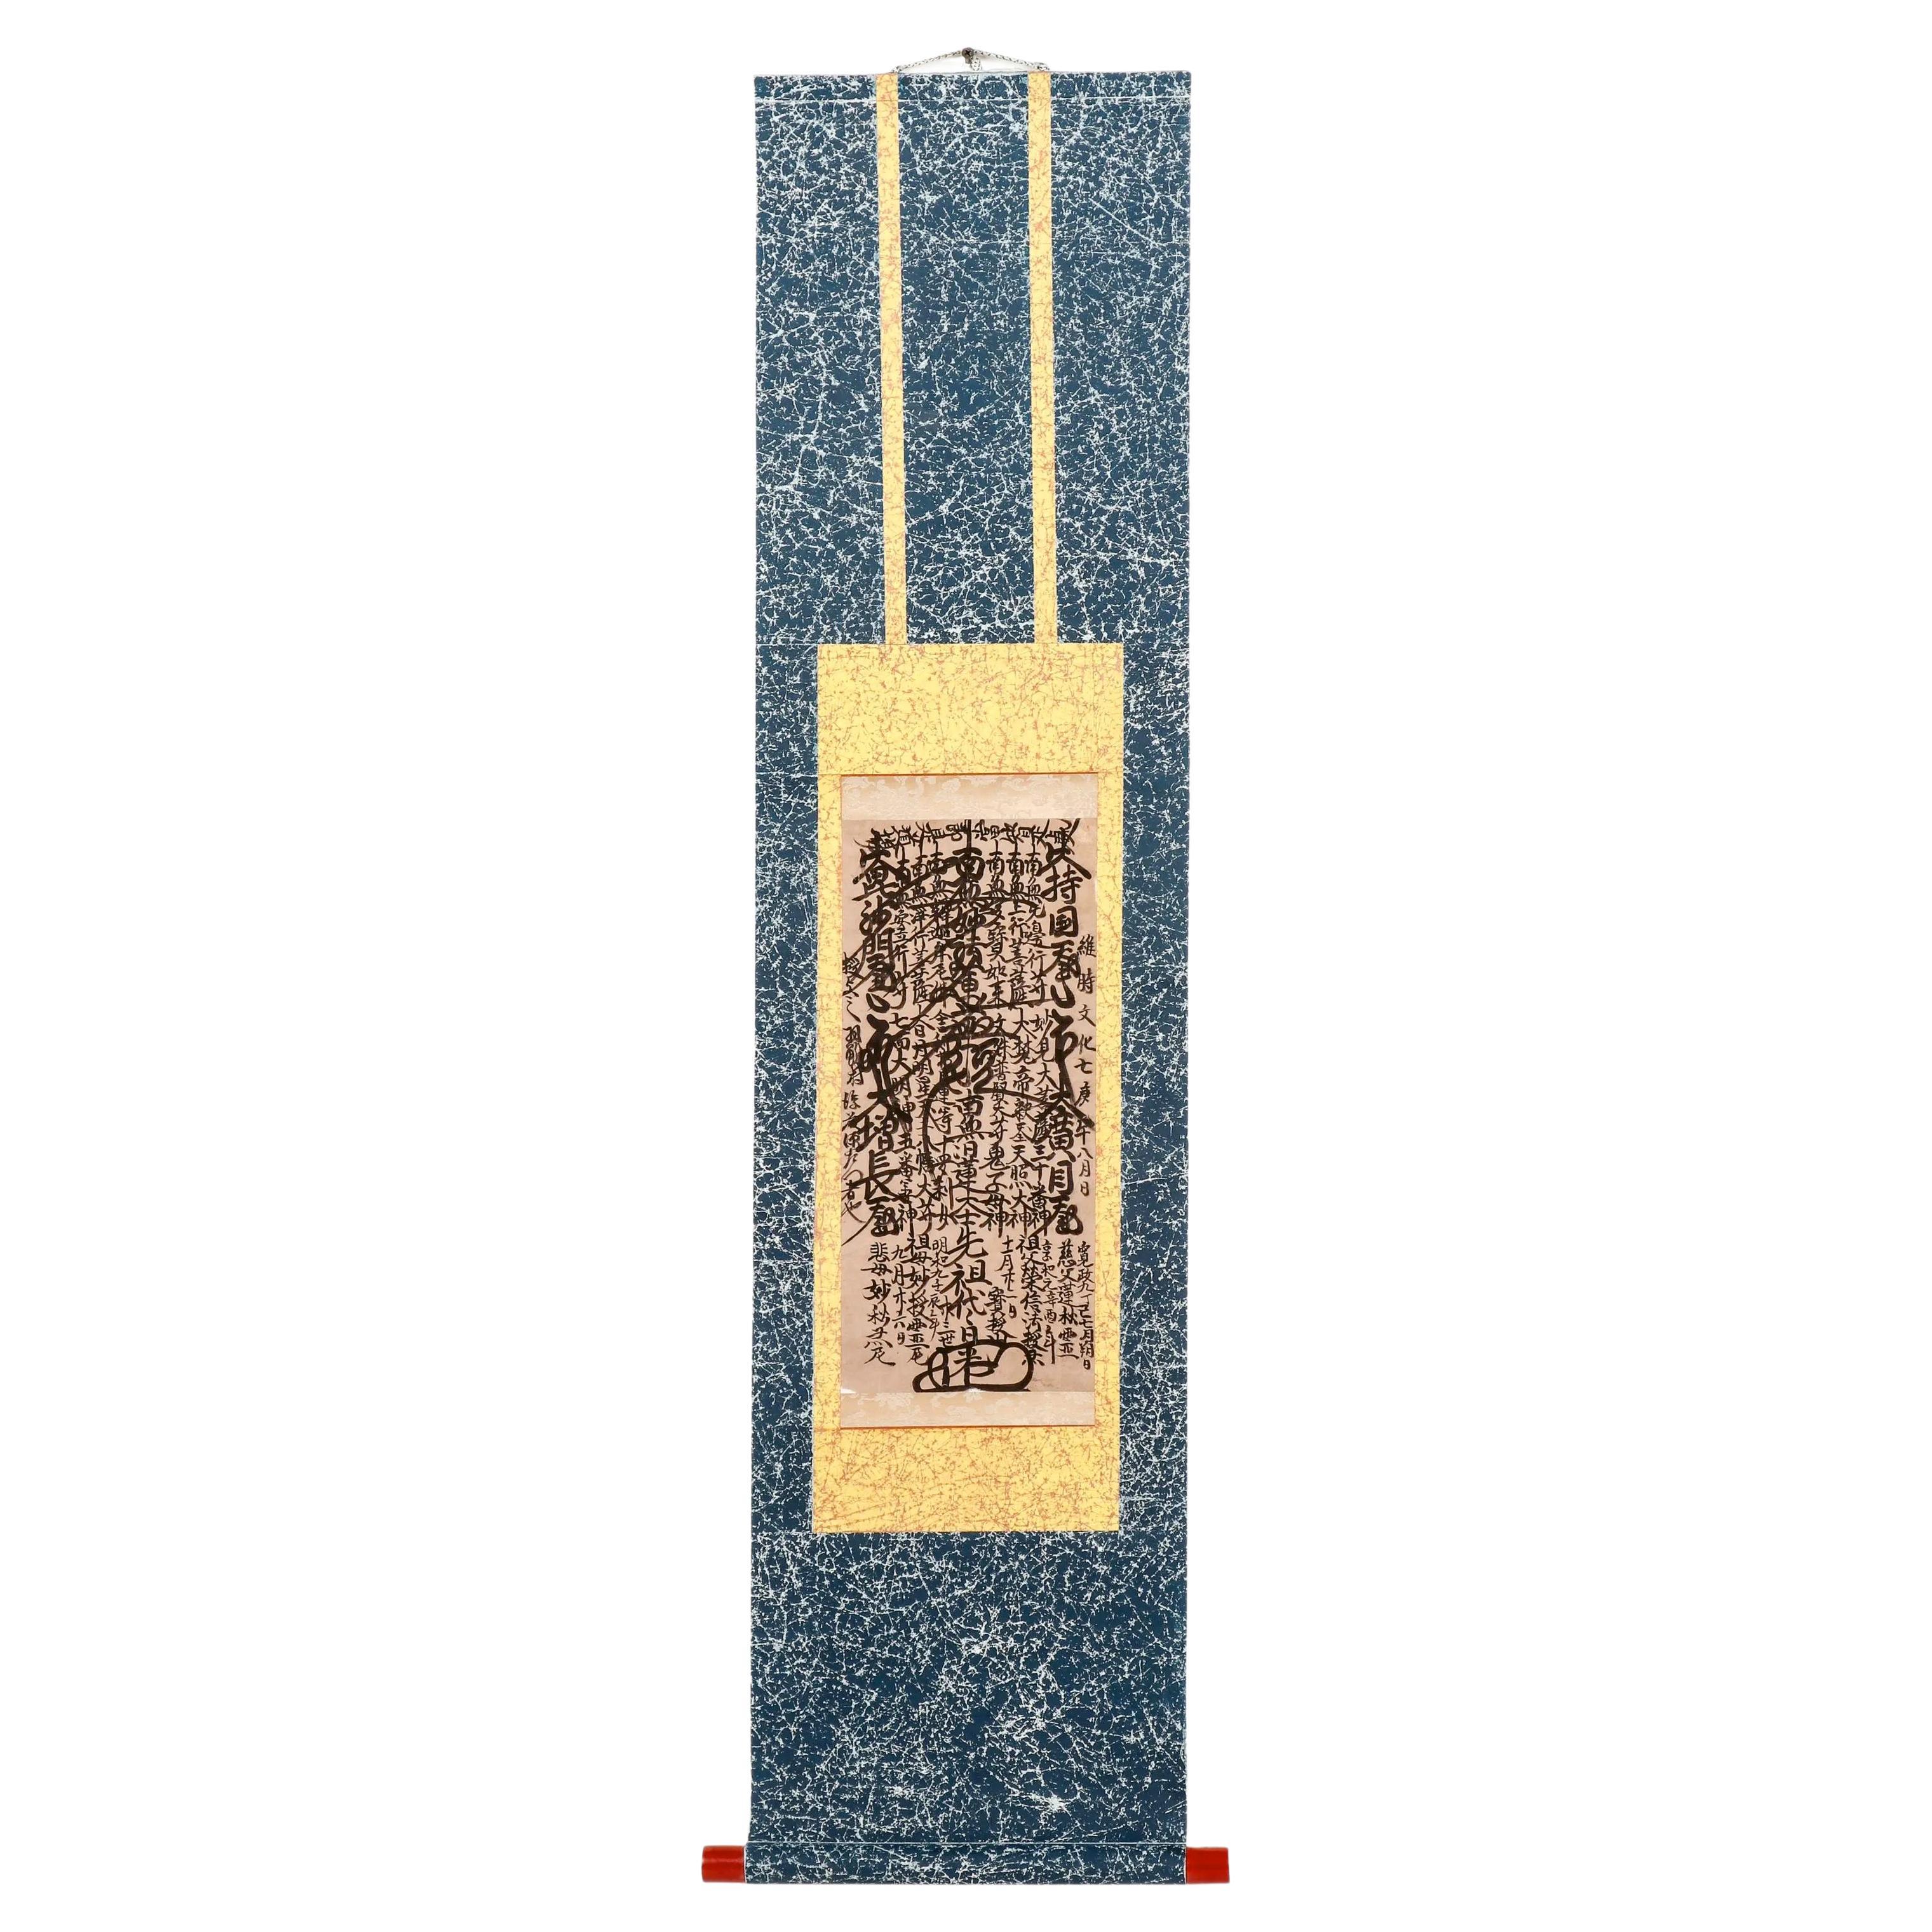 Early Japanese Gohonzon Buddhist Calligraphy Mandala Scroll Edo Period